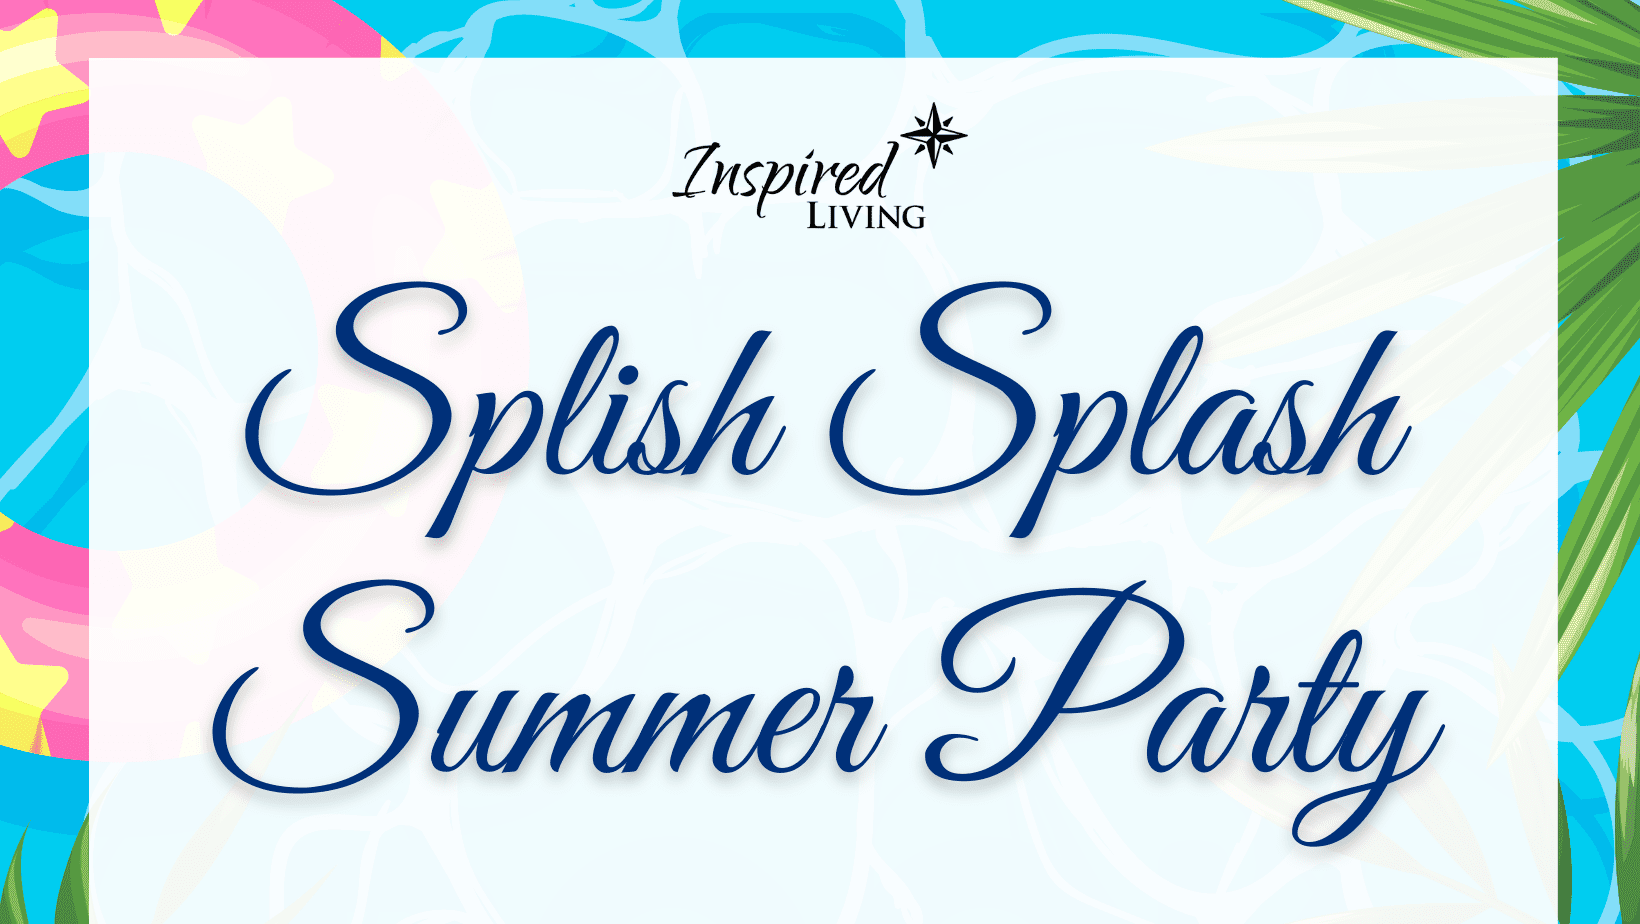 FB Cover of Splish Splash RP Event